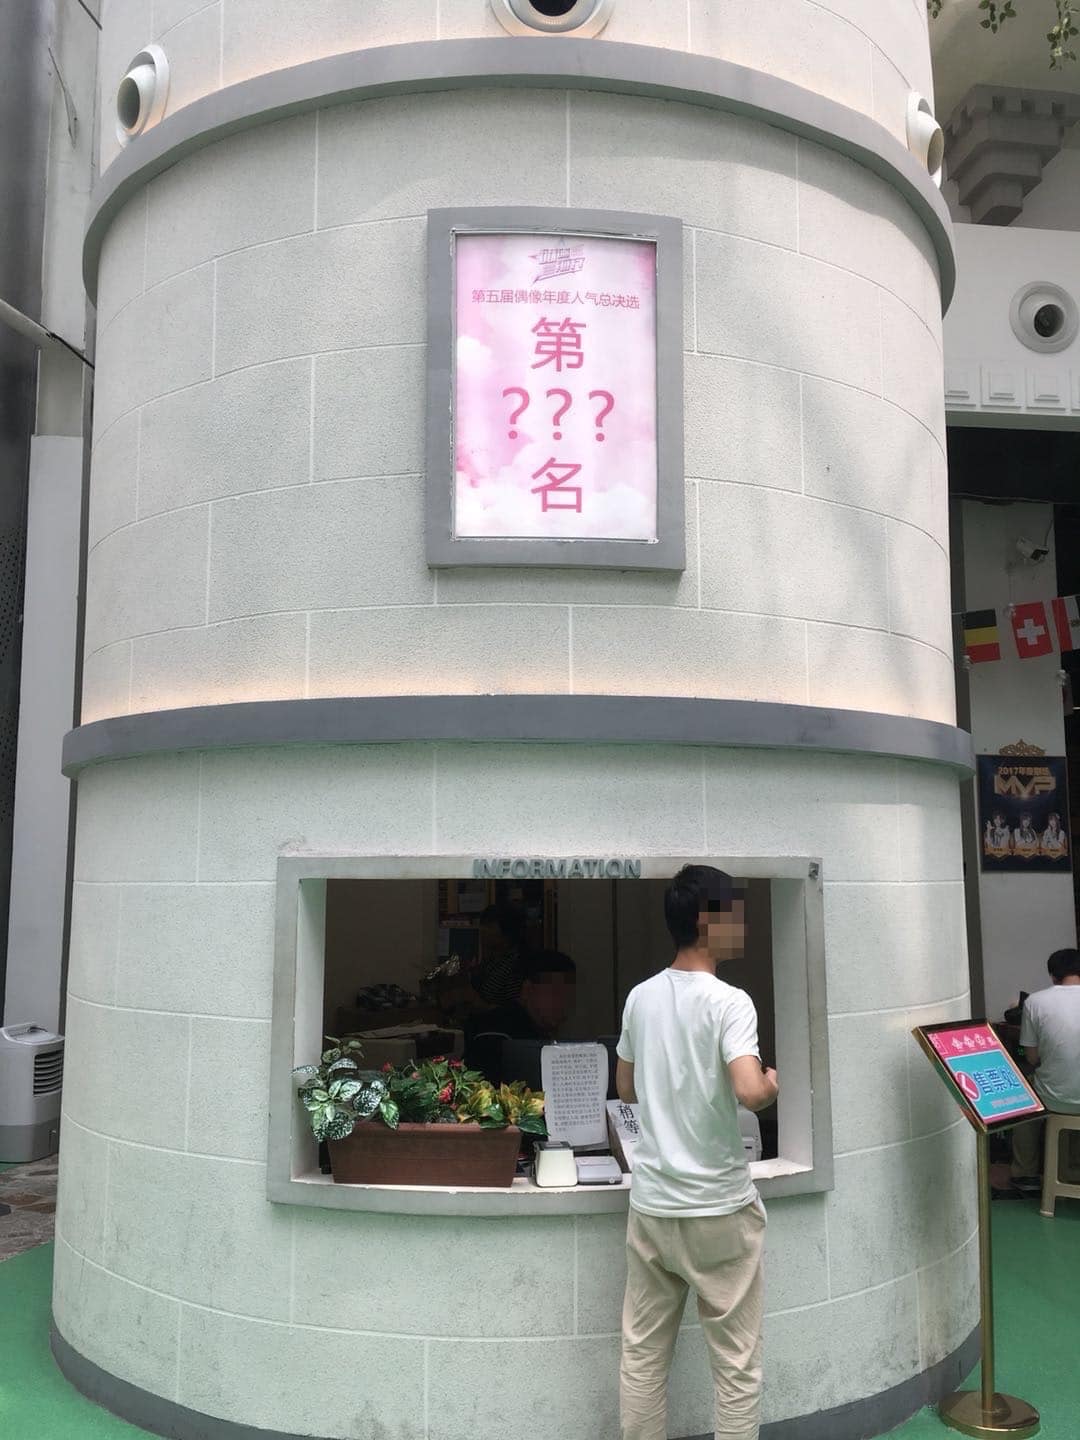 BEJ48SNH48Cafe&Shop(悠唐购物中心店)